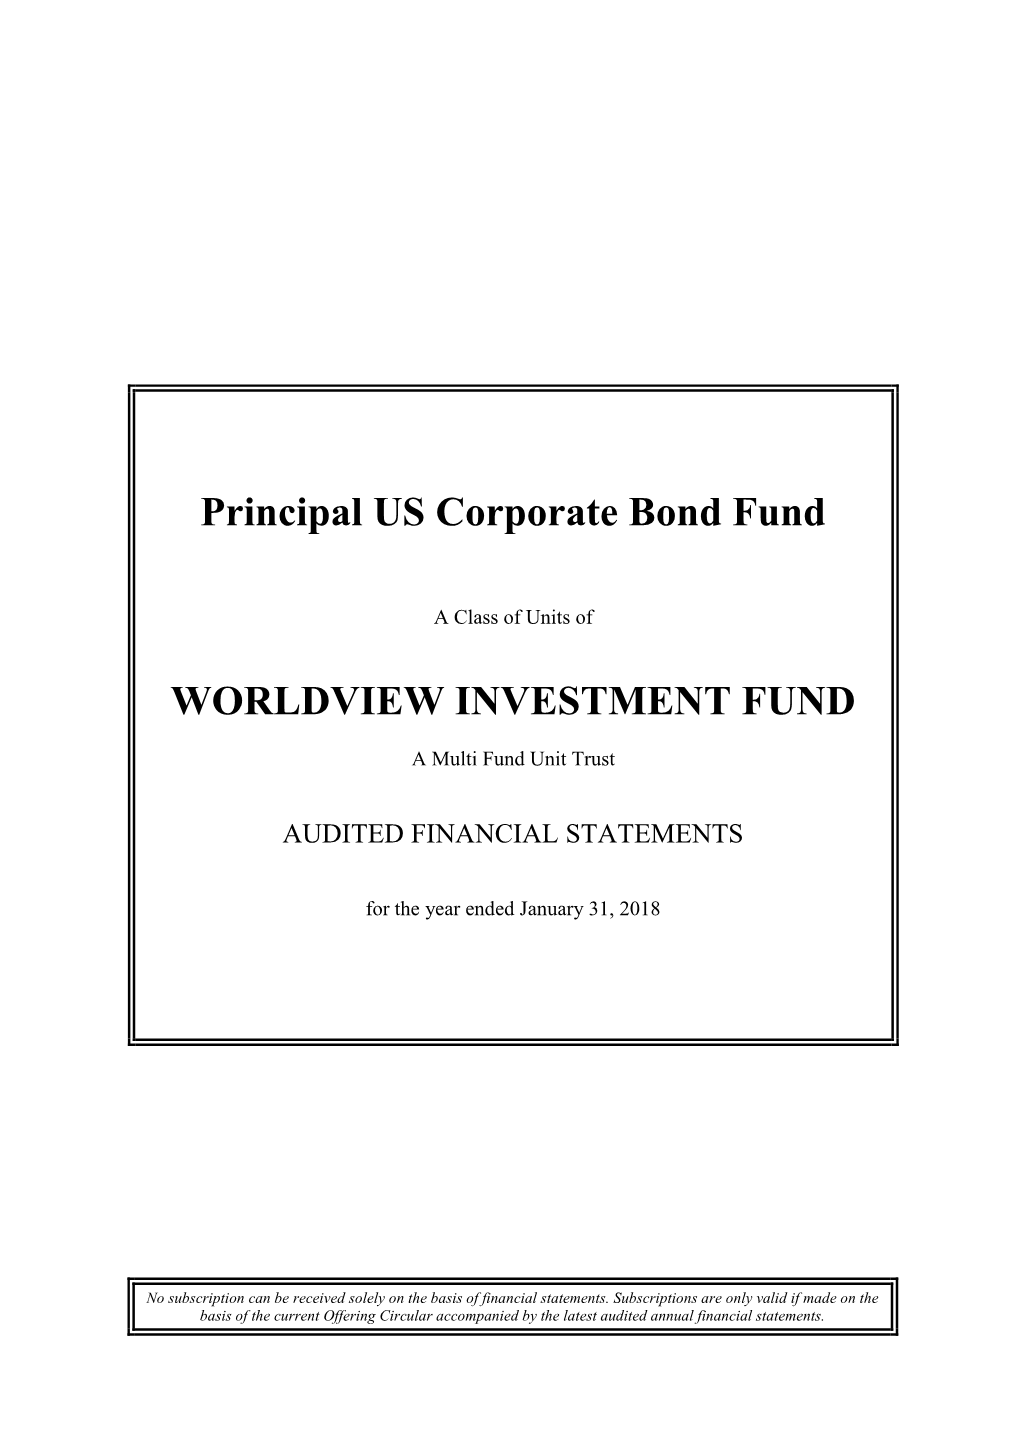 US Corporate Bond Fund